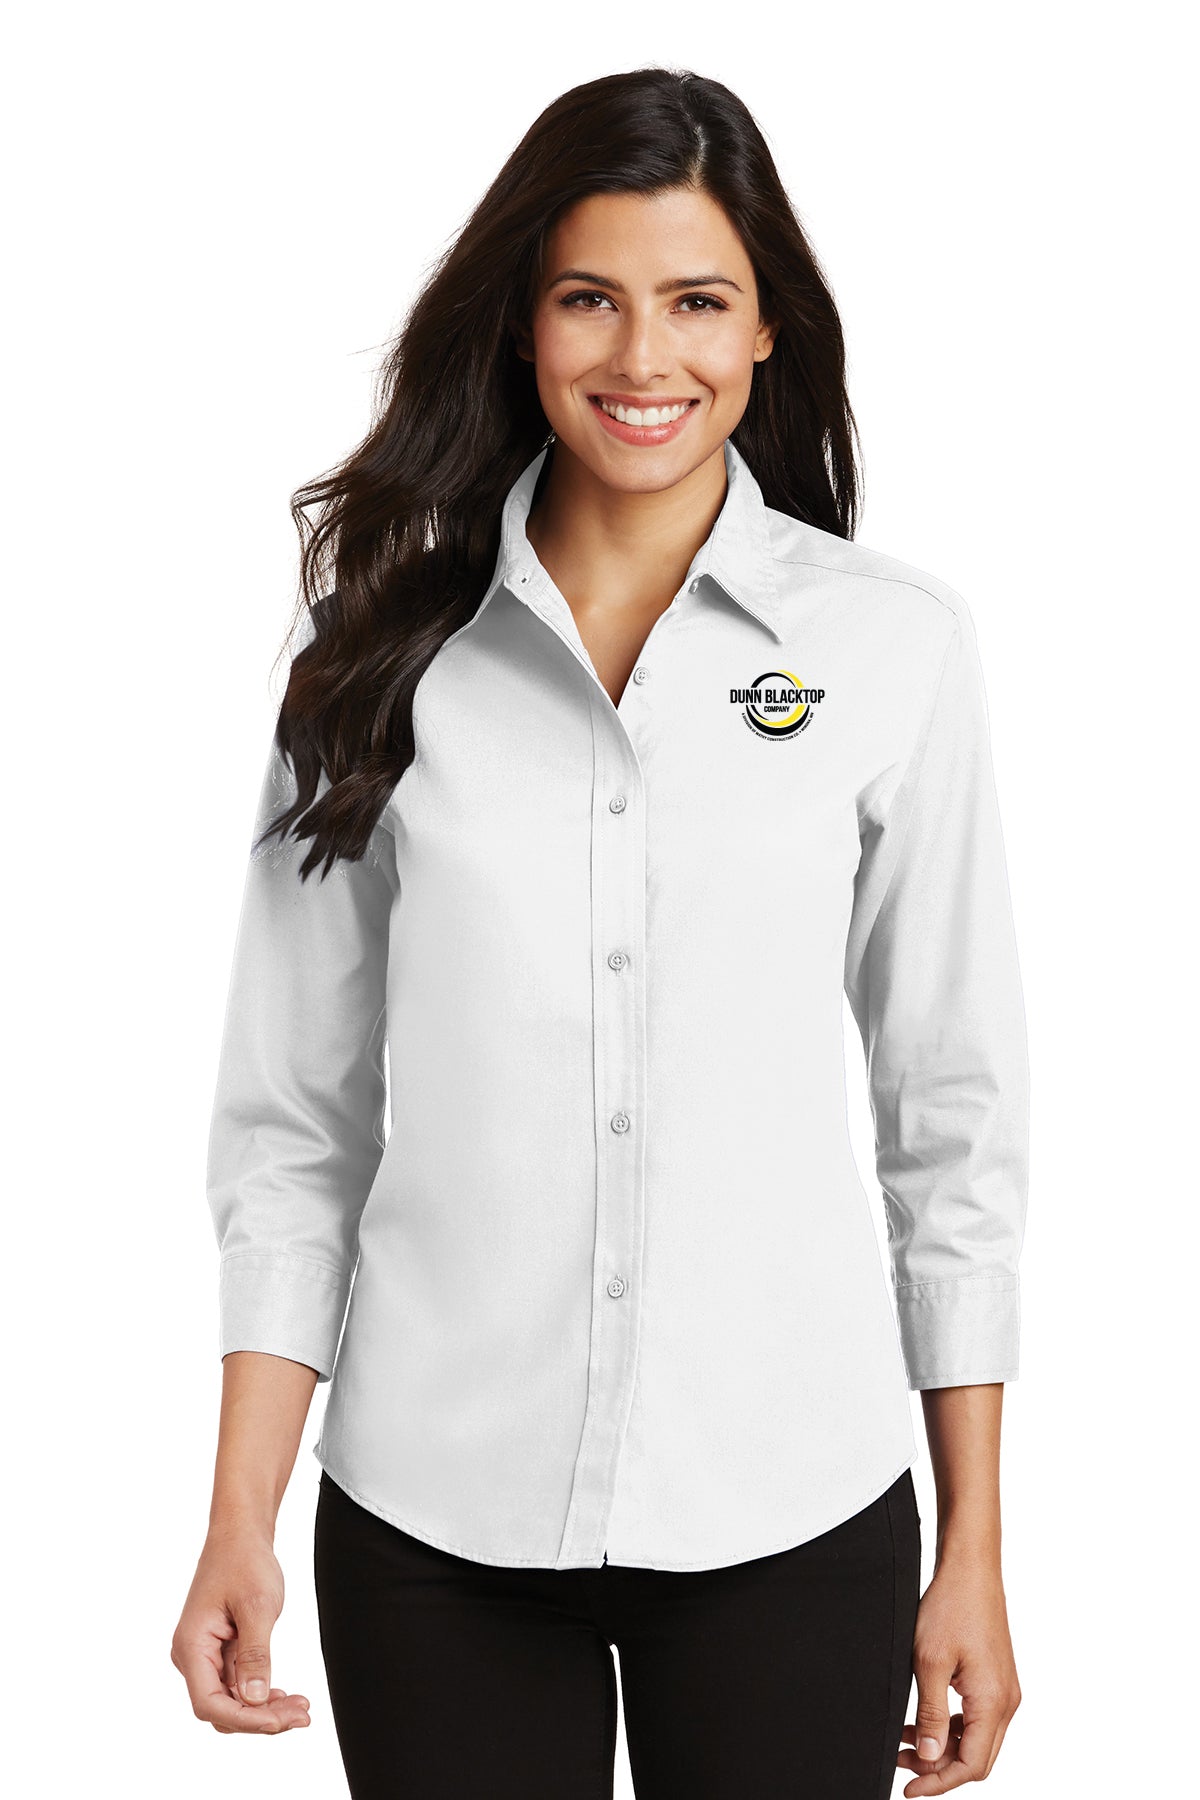 Dunn Blacktop Company Ladies Button Up Shirt